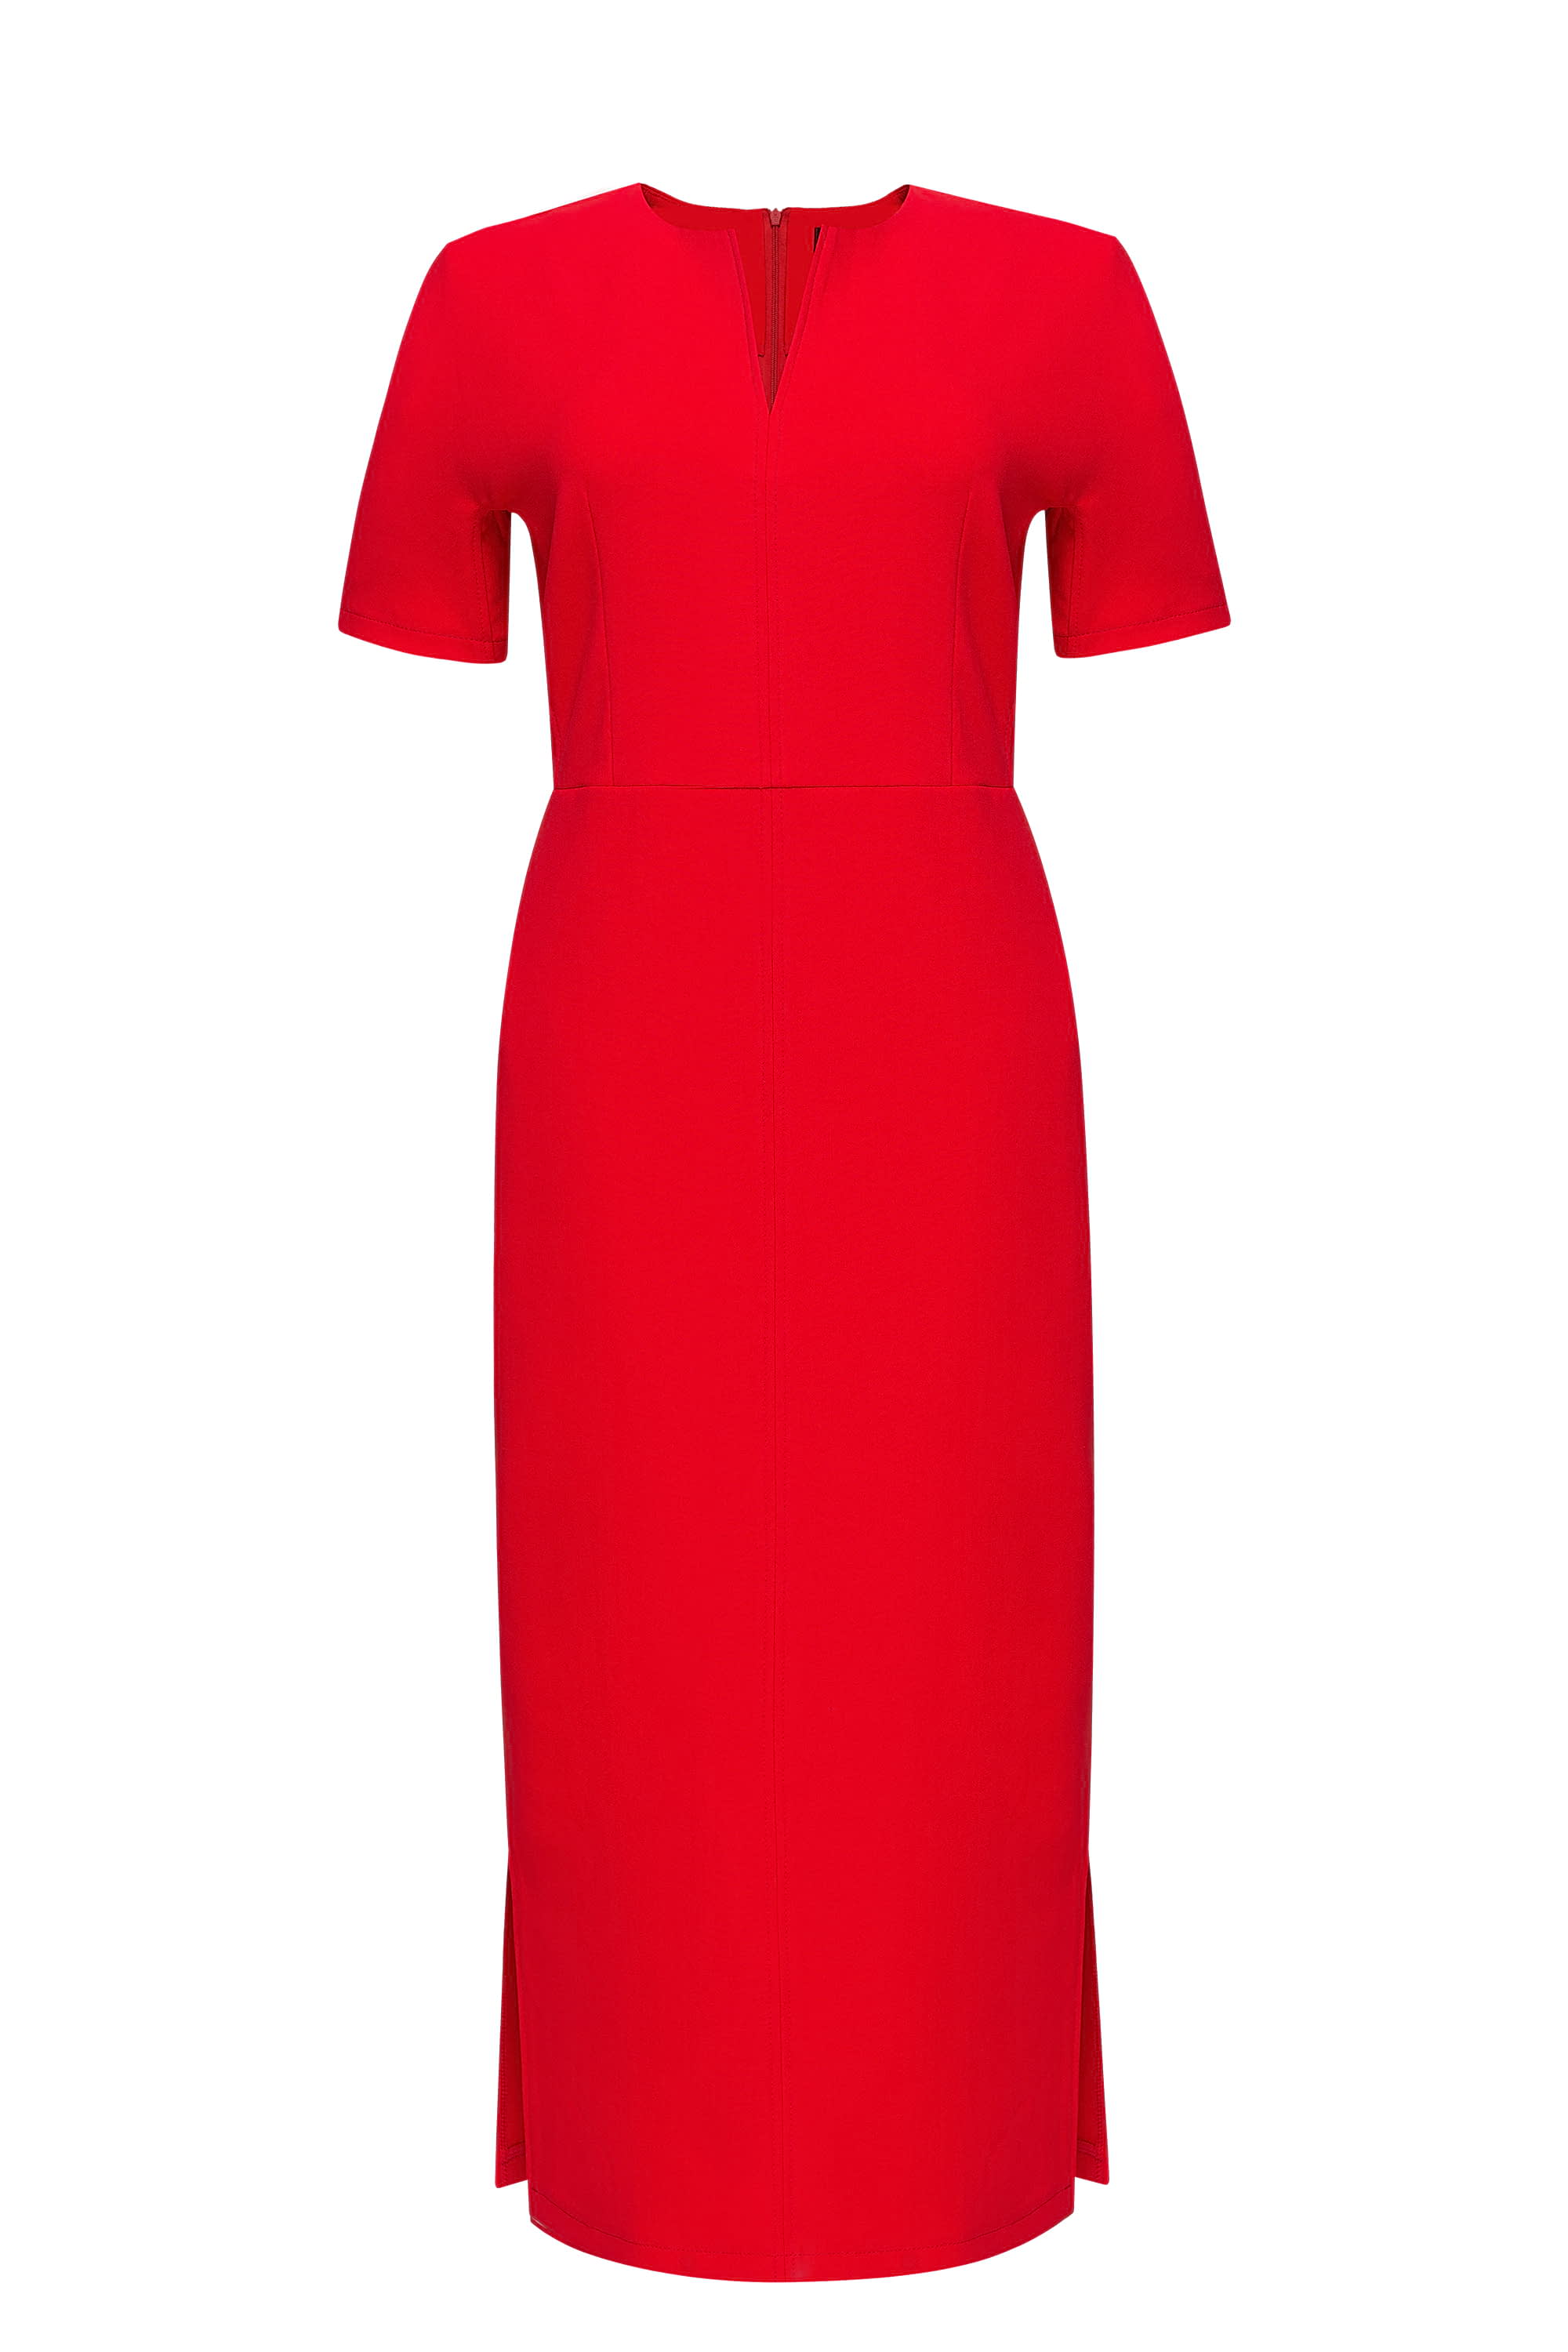 V-neck red dress with slits  , photo 11